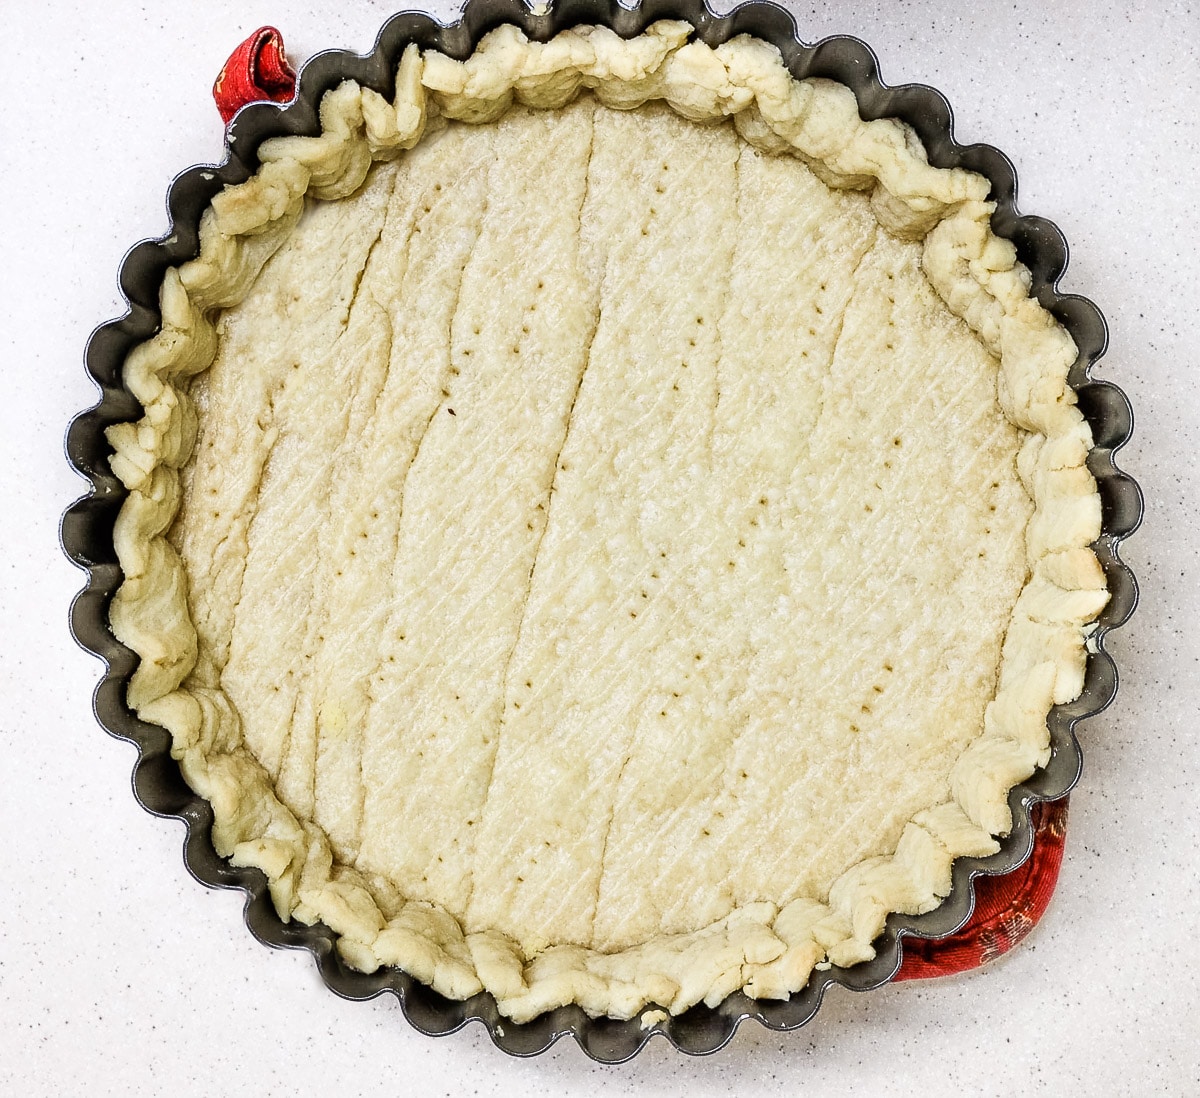 store bought pie crust par-baked in a tart pan